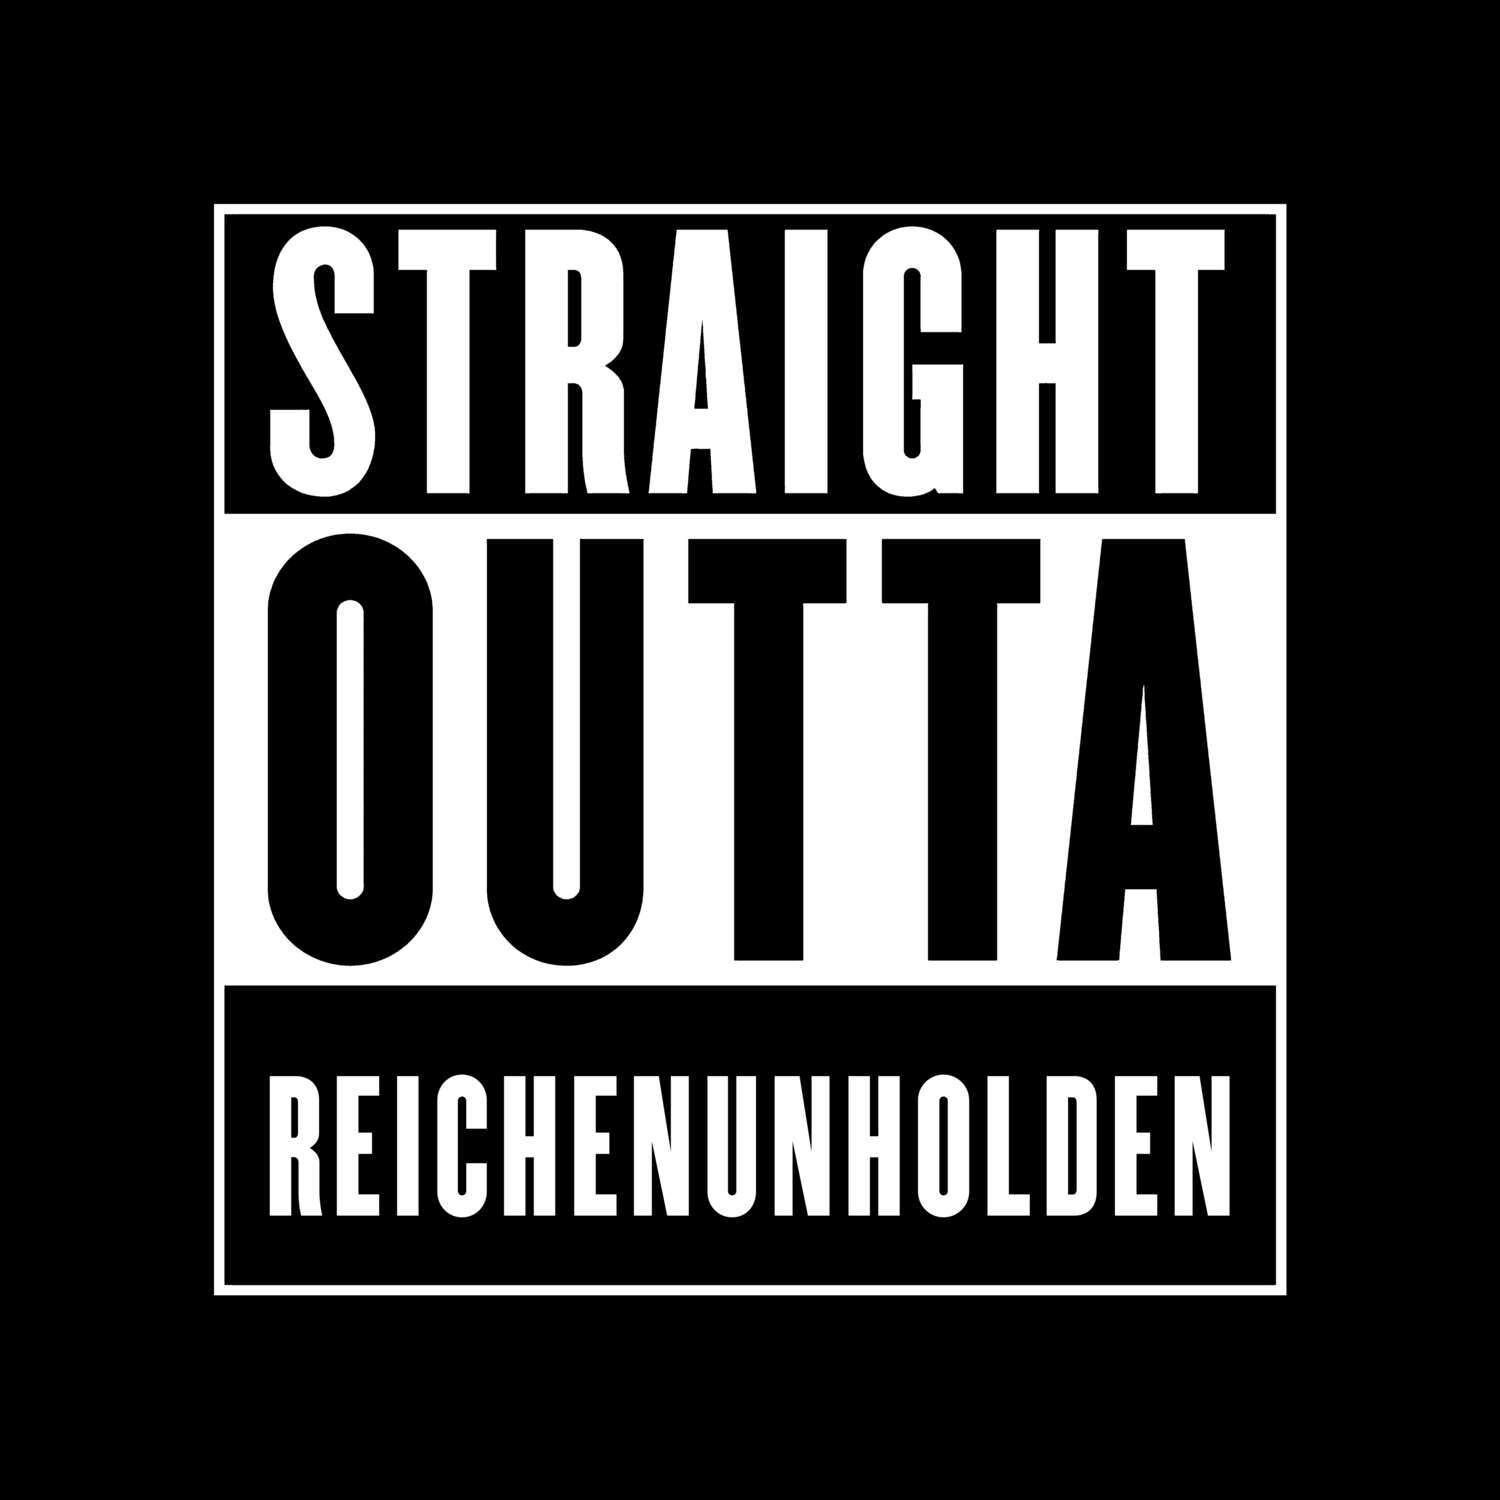 Reichenunholden T-Shirt »Straight Outta«